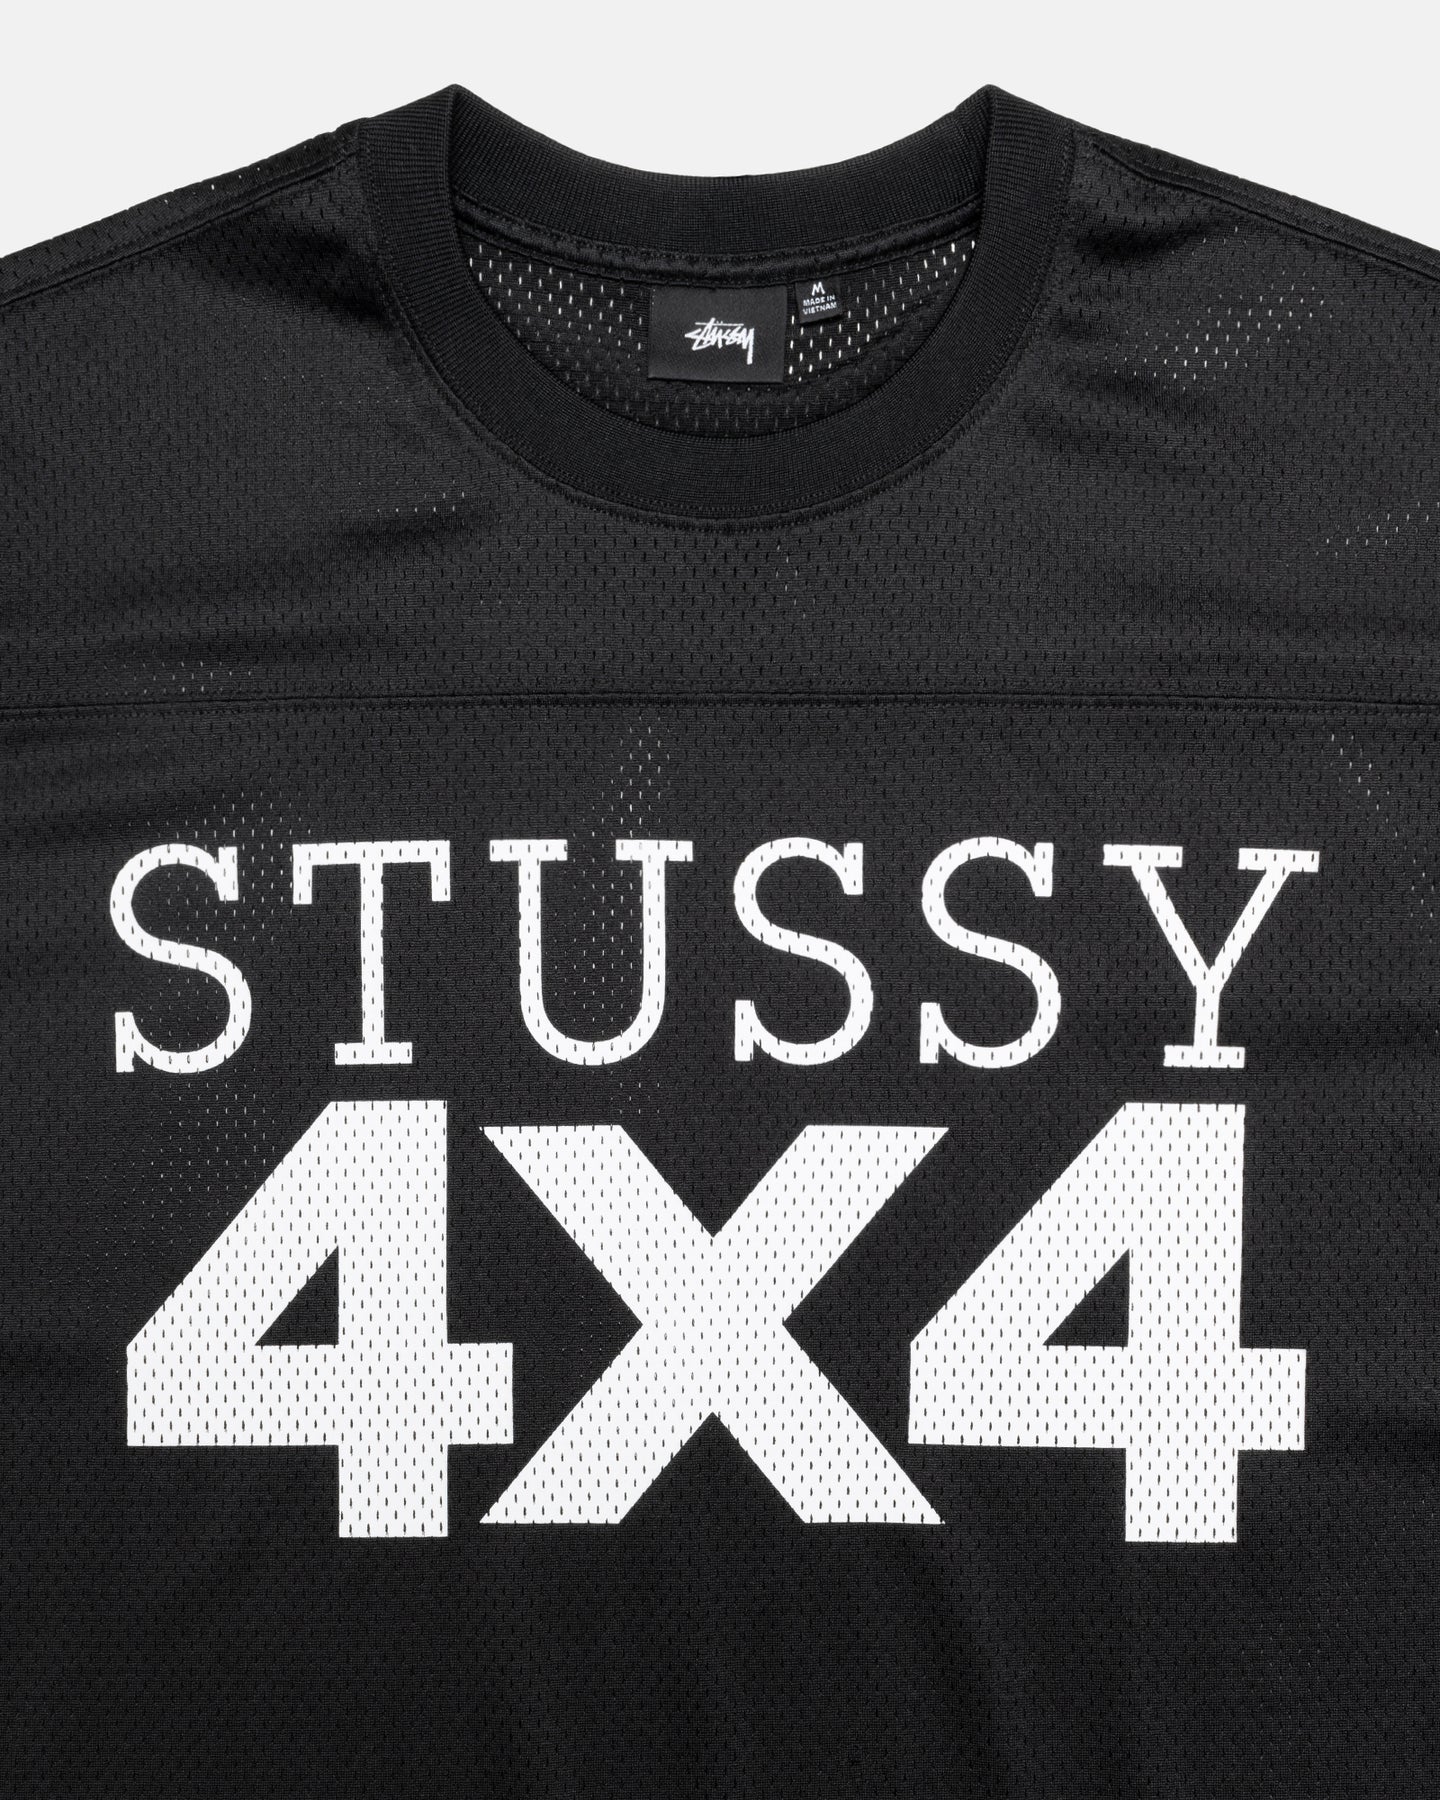 Stüssy 4X4 Mesh Football Jersey Black